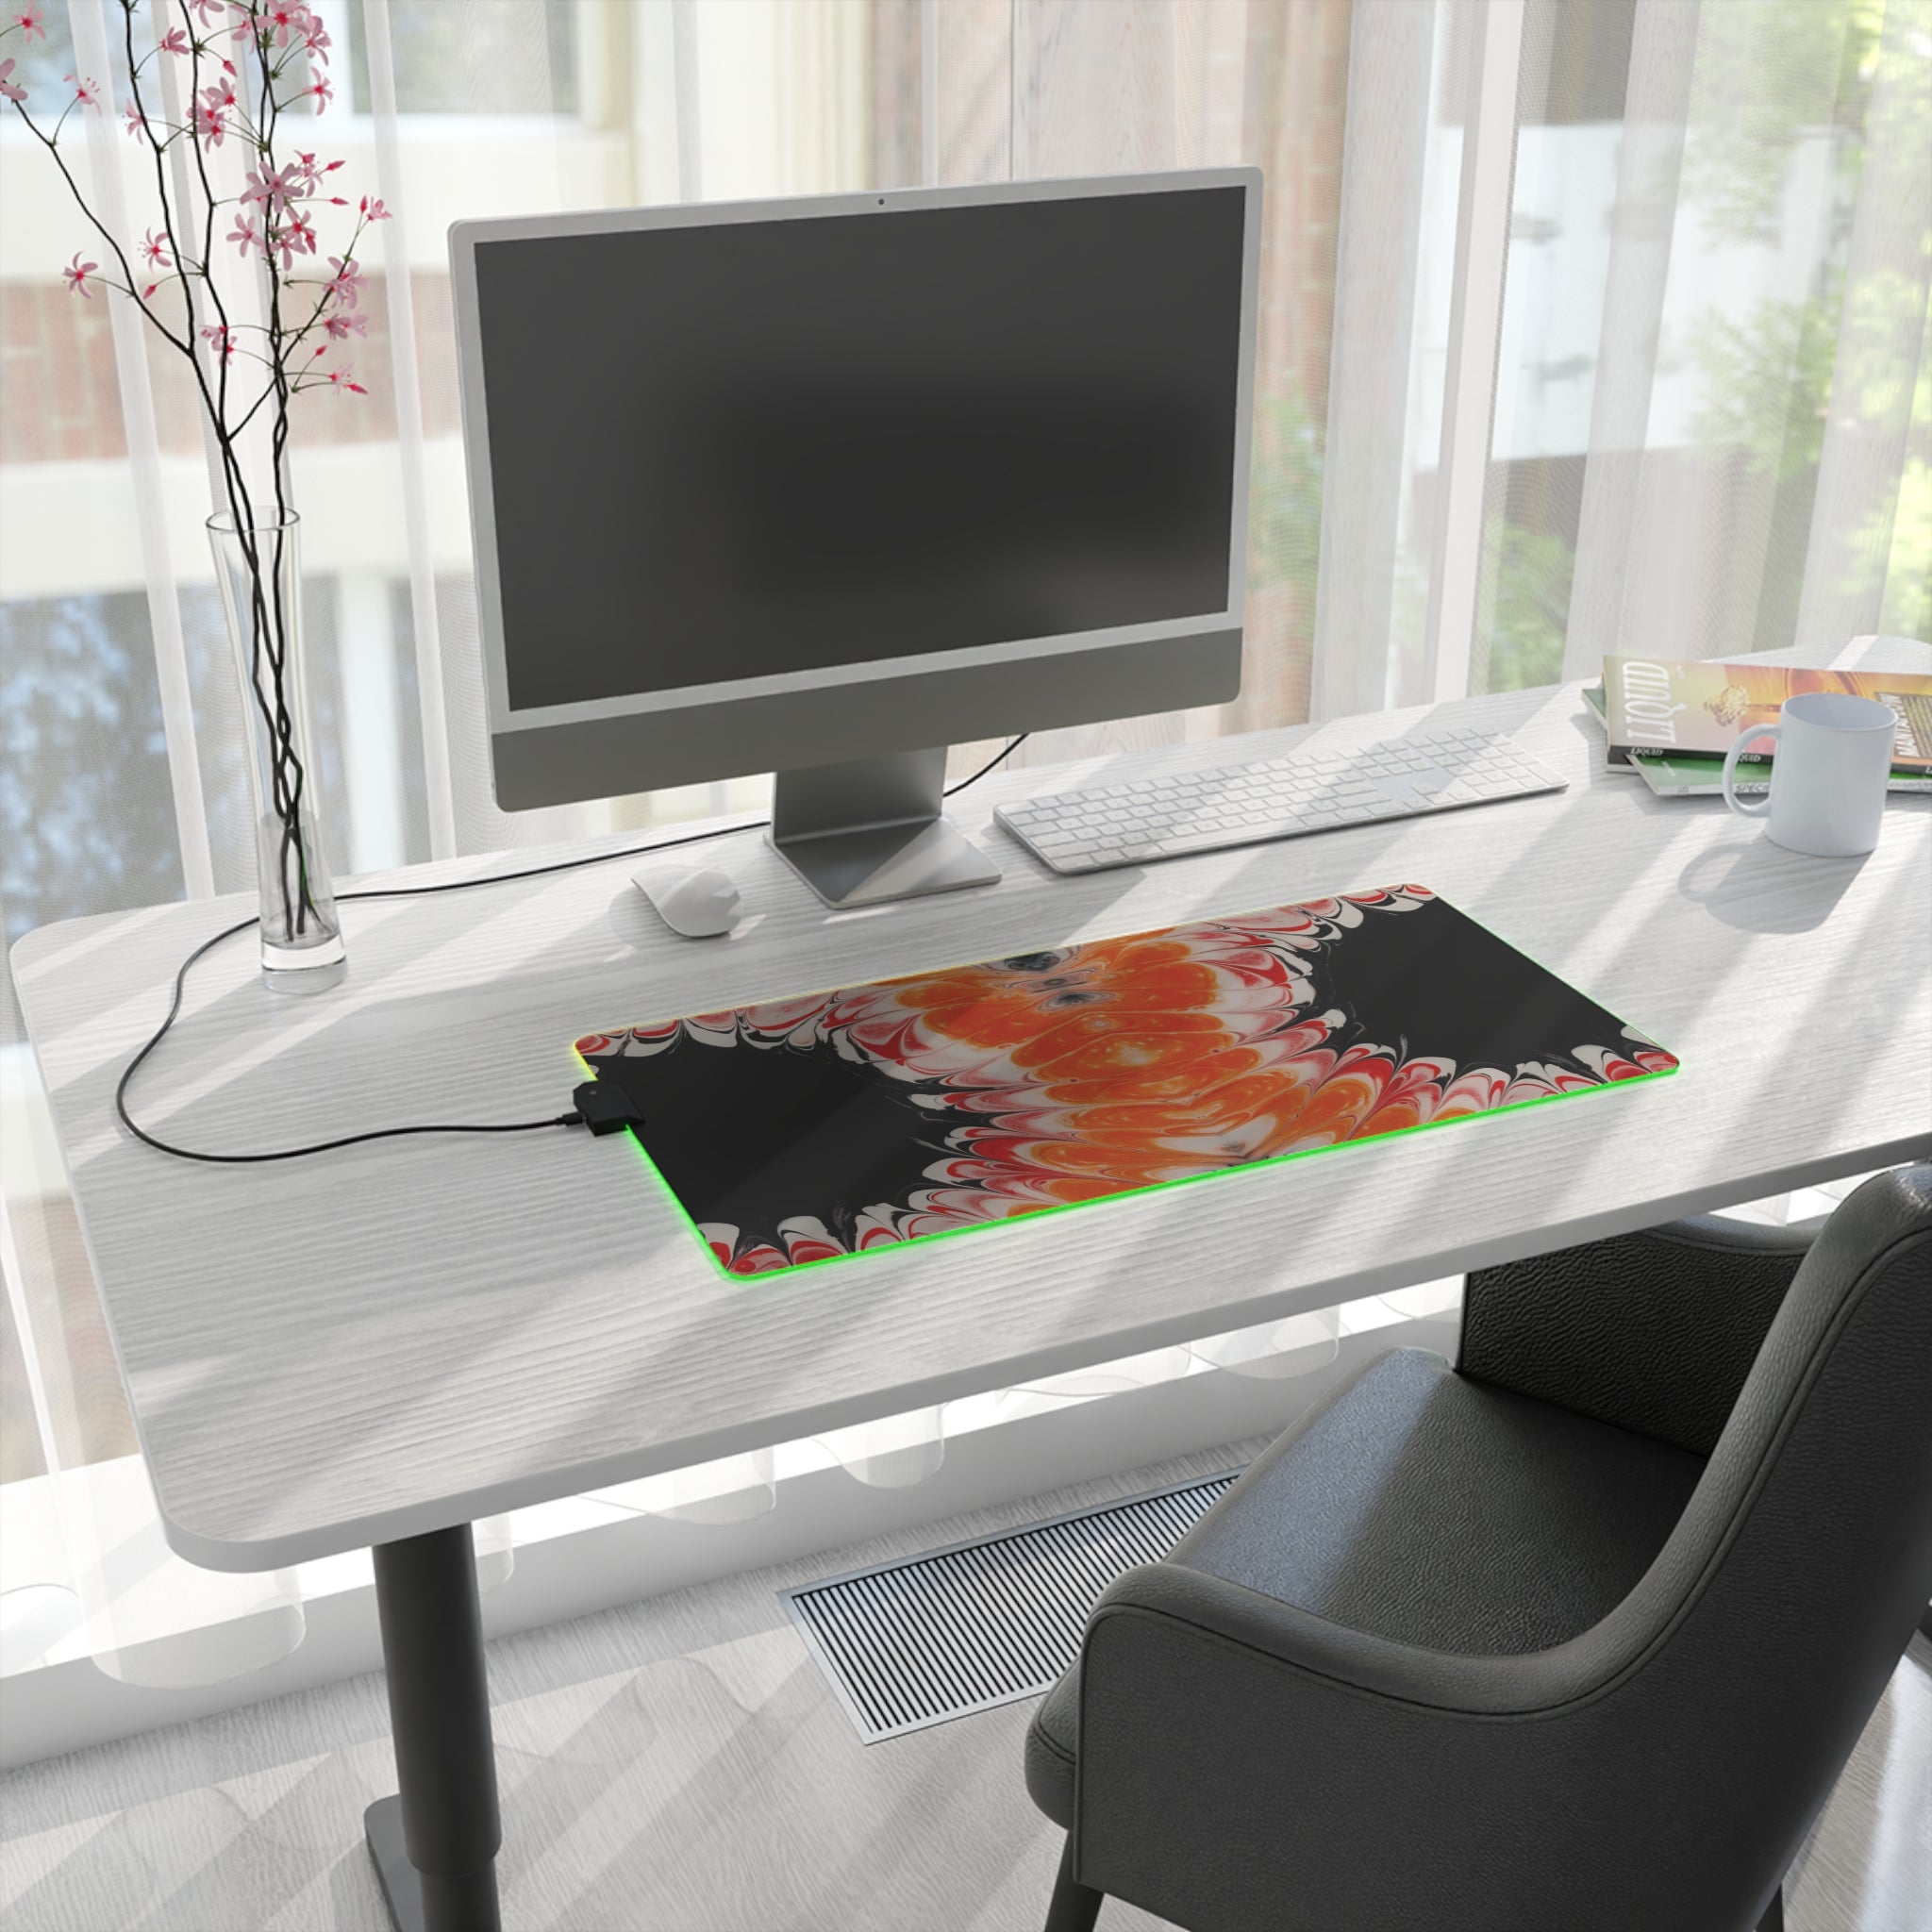 Cameron Creations - LED Gaming Mouse Pad - Ventanus Portal - 23"x11"